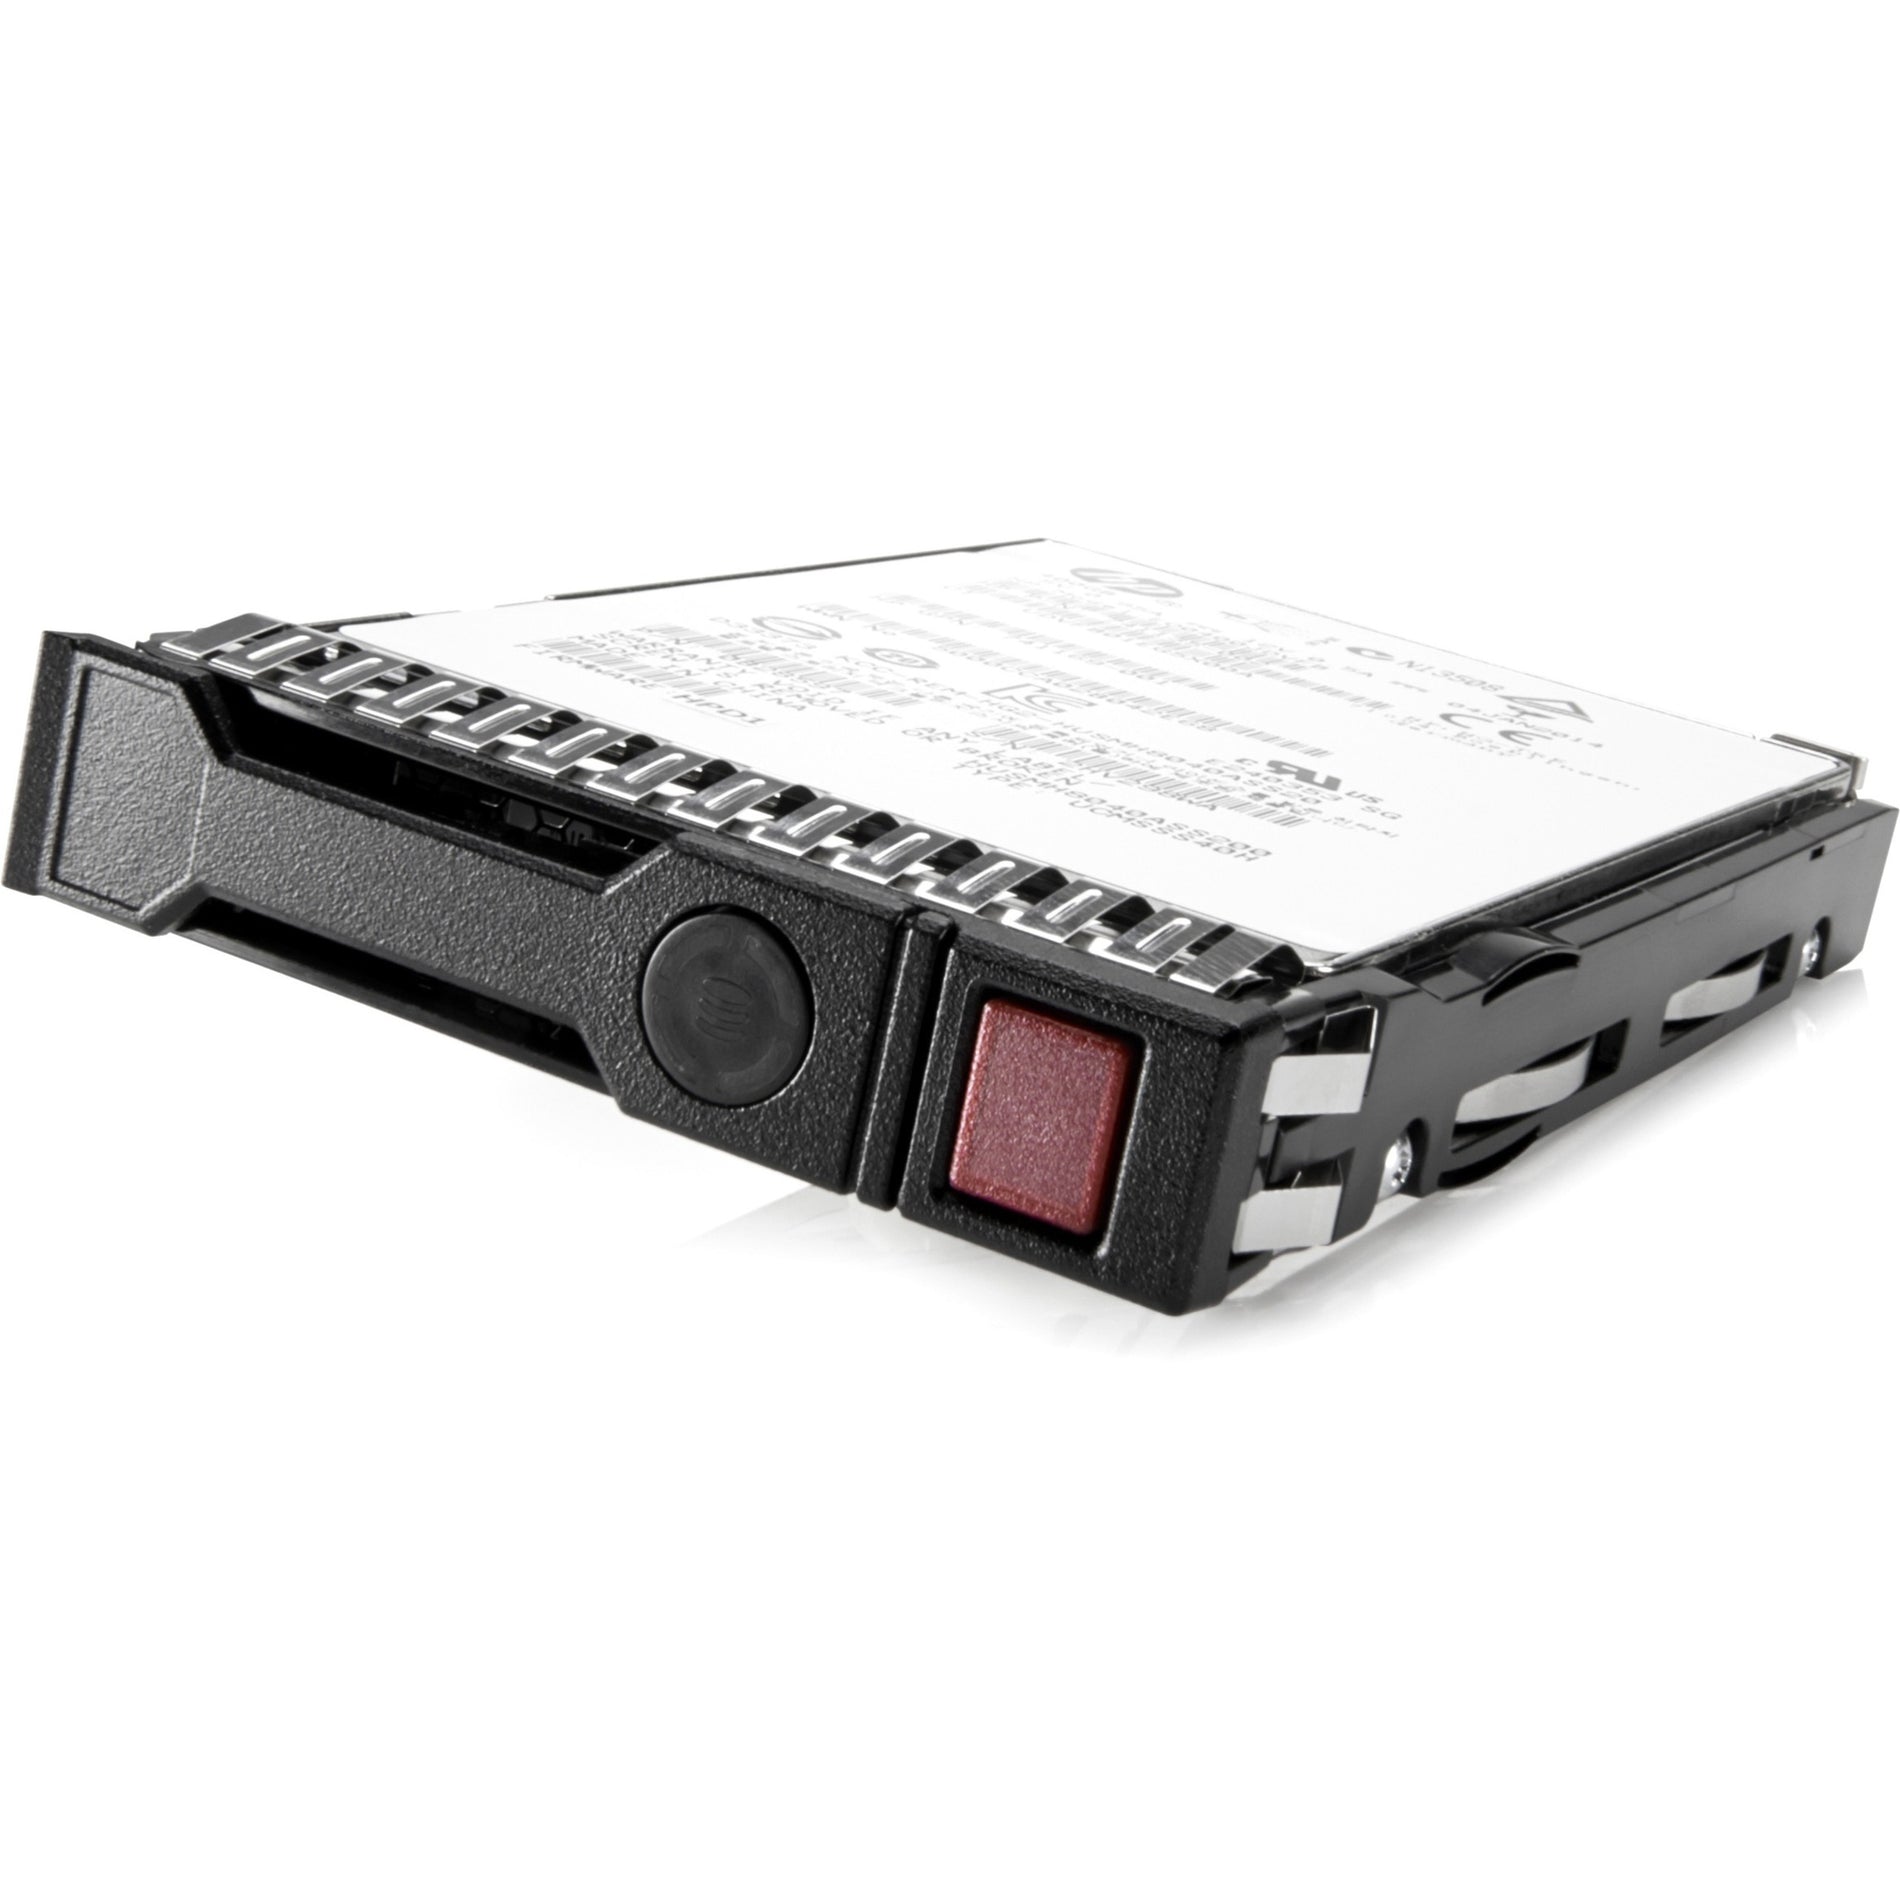 HPE 870753-B21 Hard Drive - 300 GB SAS Internal, 12Gb/s SAS, 15000 rpm